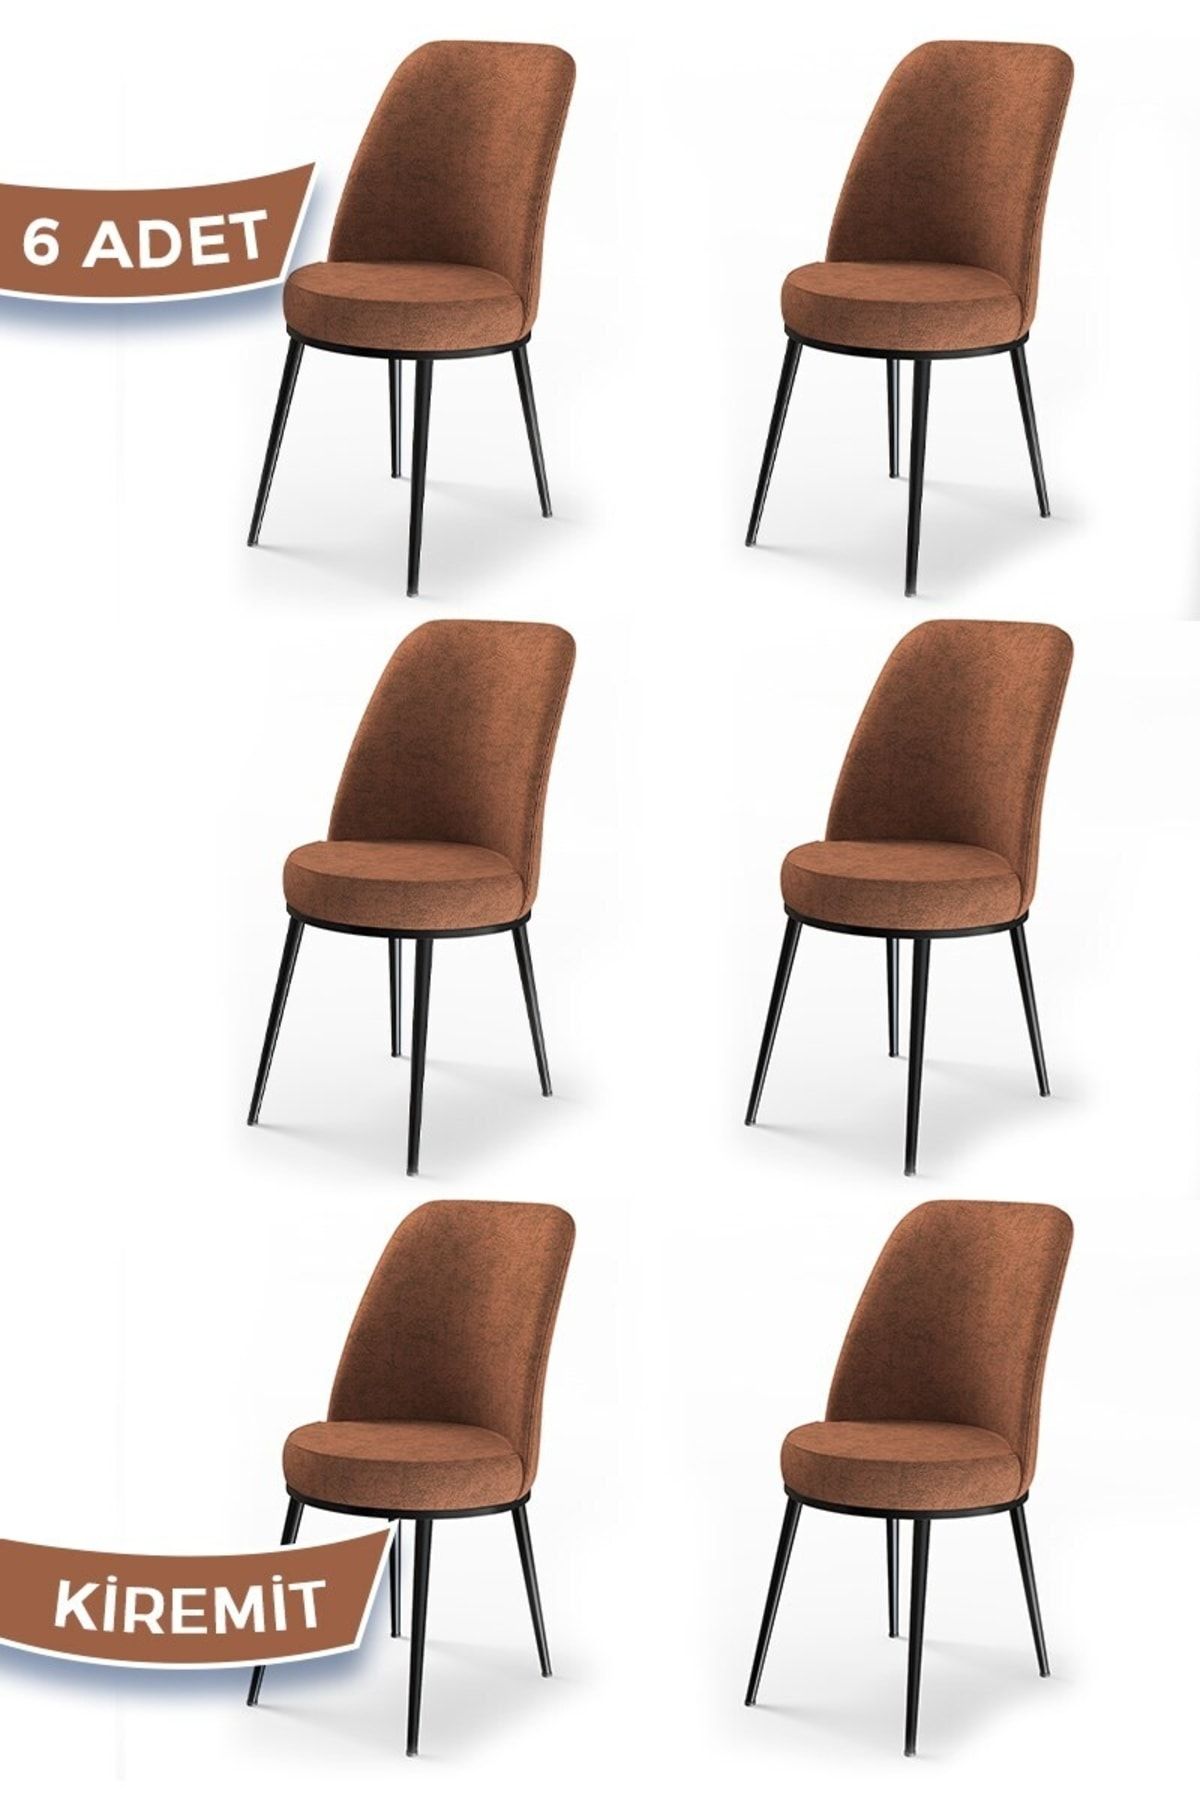 Canisa Concept Dexa Serisi, Üst Kalite Mutfak Sandalyesi, Metal Siyah Iskeletli, 6 Adet Kiremit Sandalye